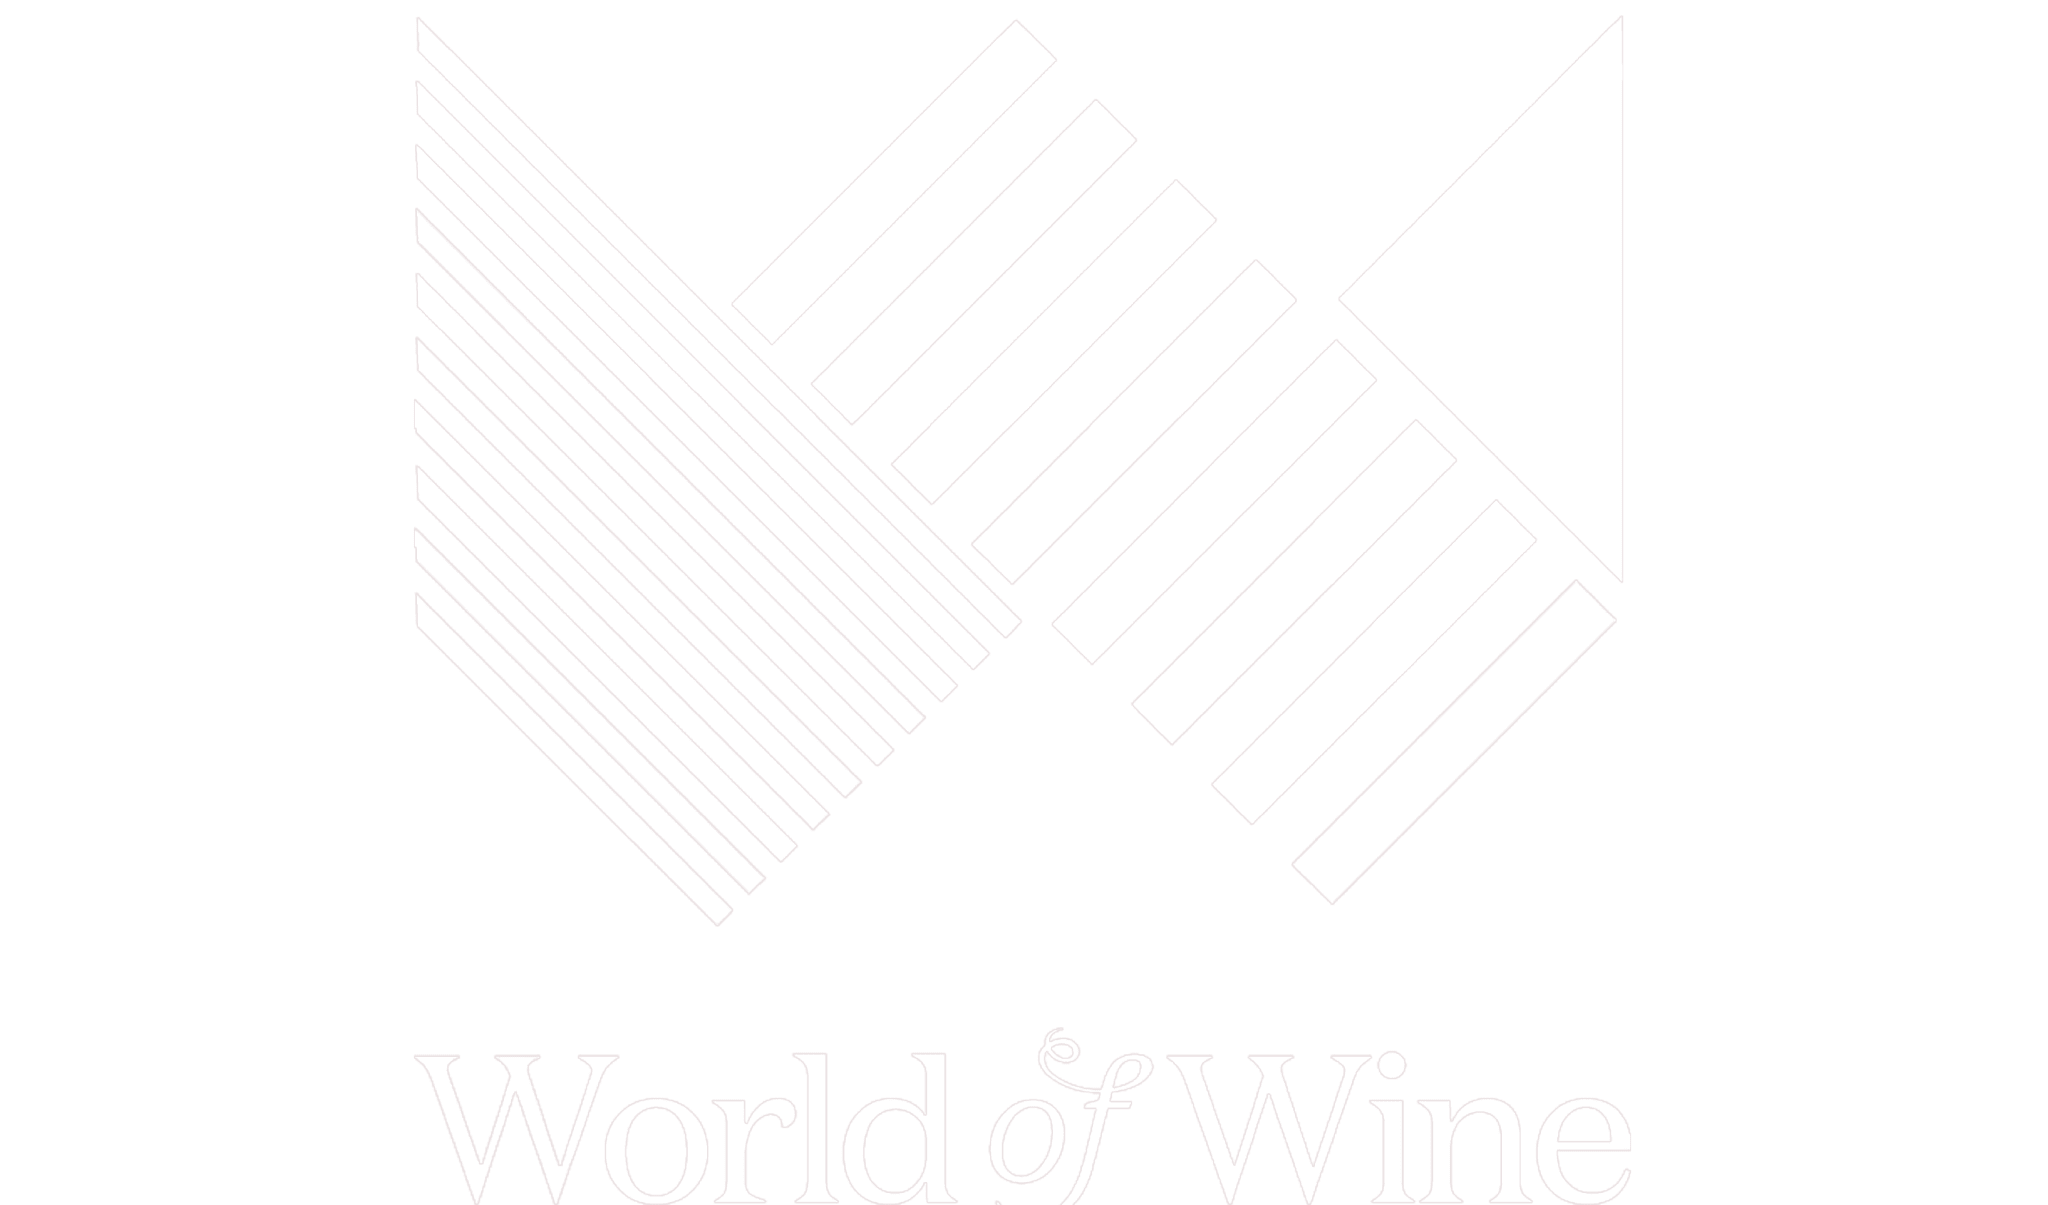 World of wine logo